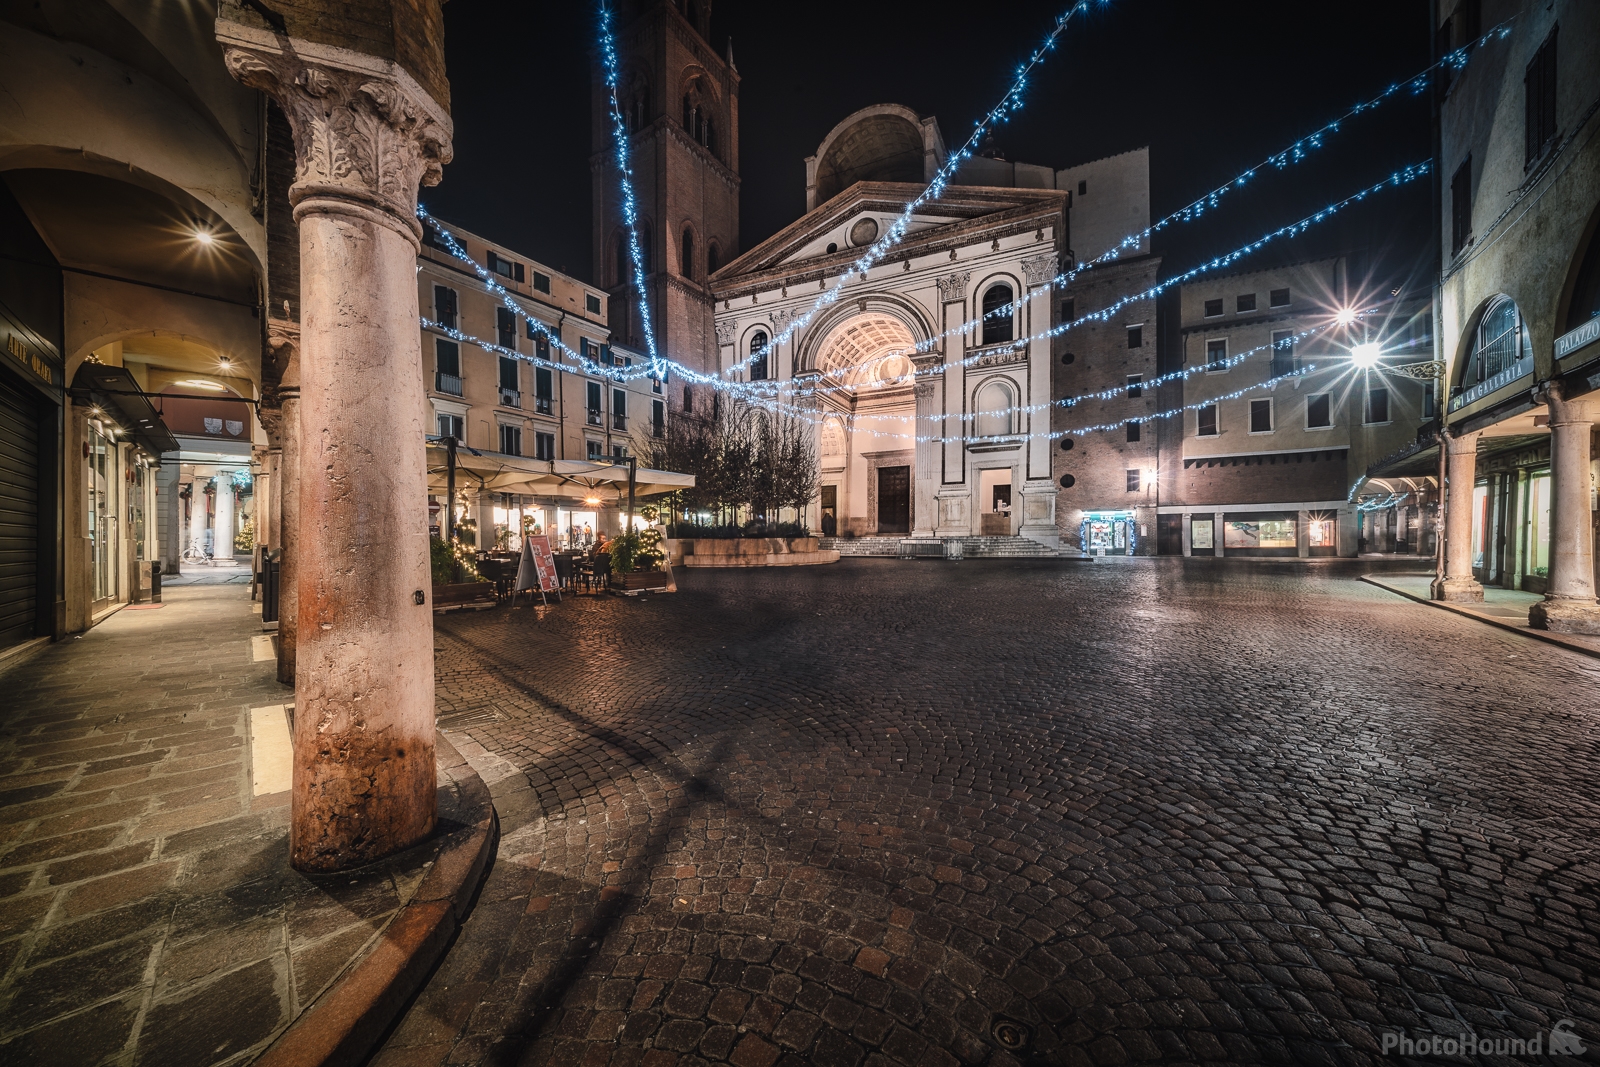 Image of Mantua Mantegna Square and the Saint Andrew’s Cathedral Facade by Raimondo Giamberduca